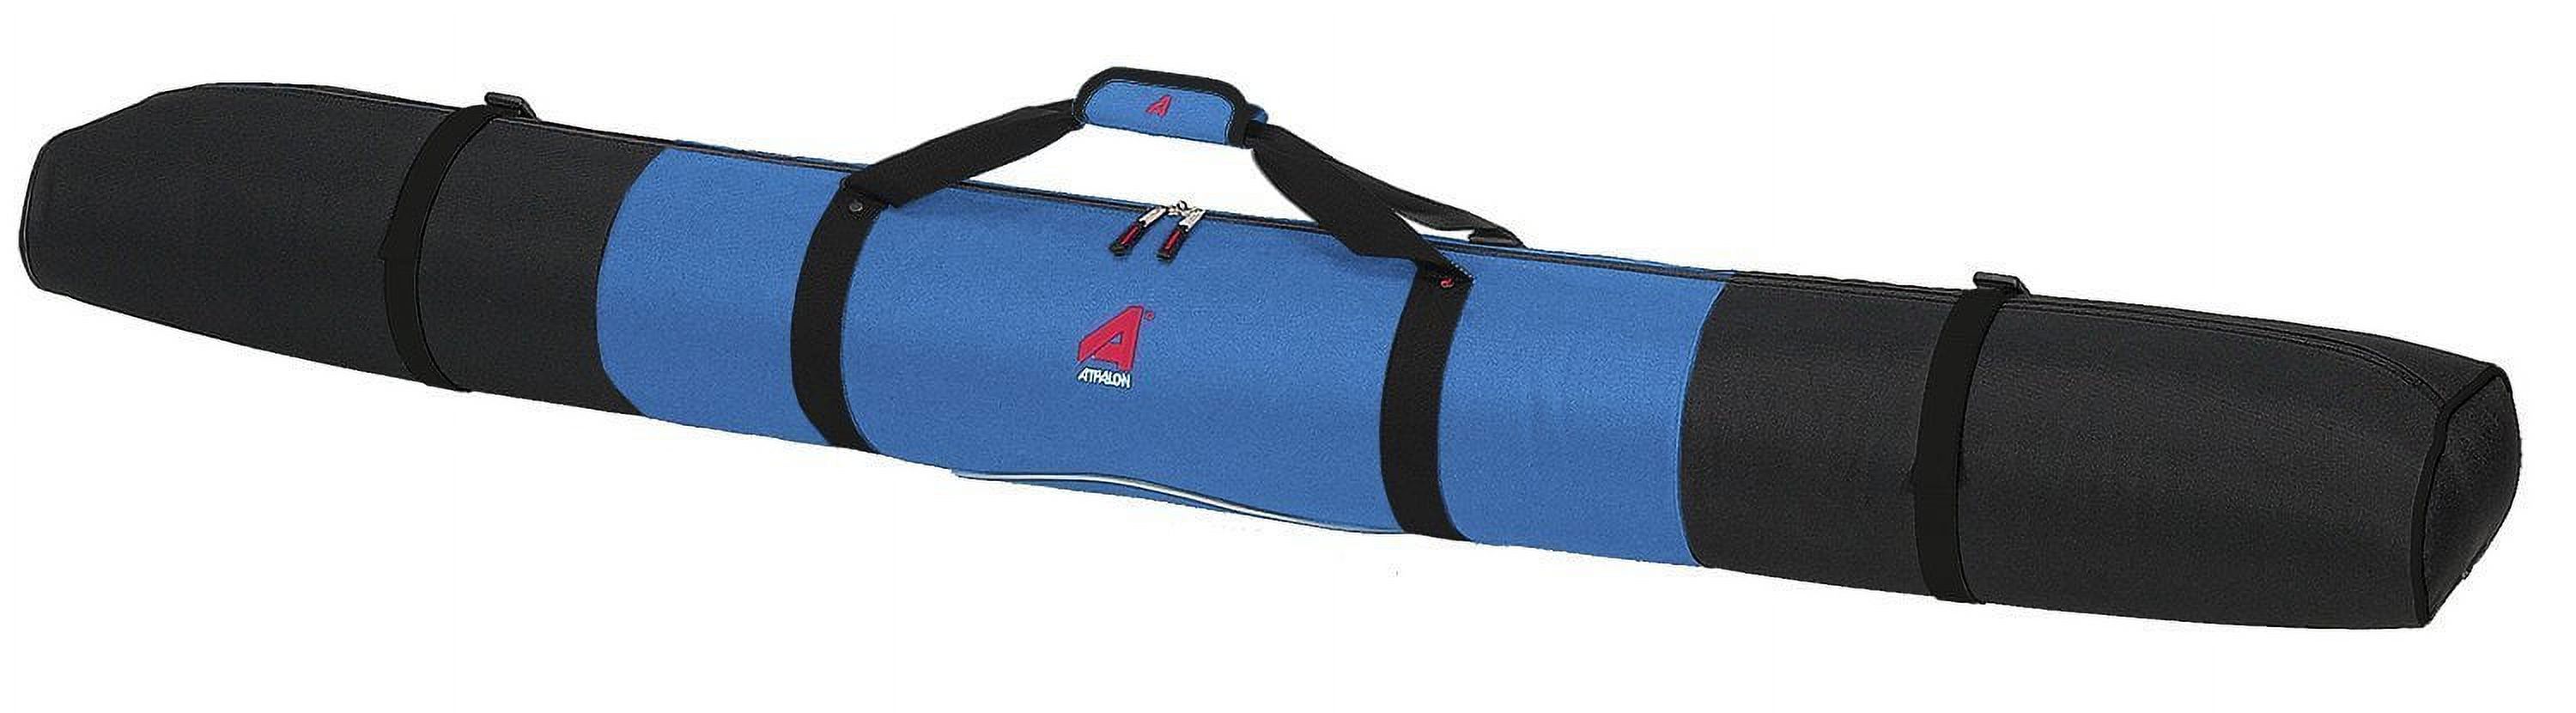 Athalon Single Ski Bag Padded (Glacier Blue/Black, 180 cm) - image 1 of 2